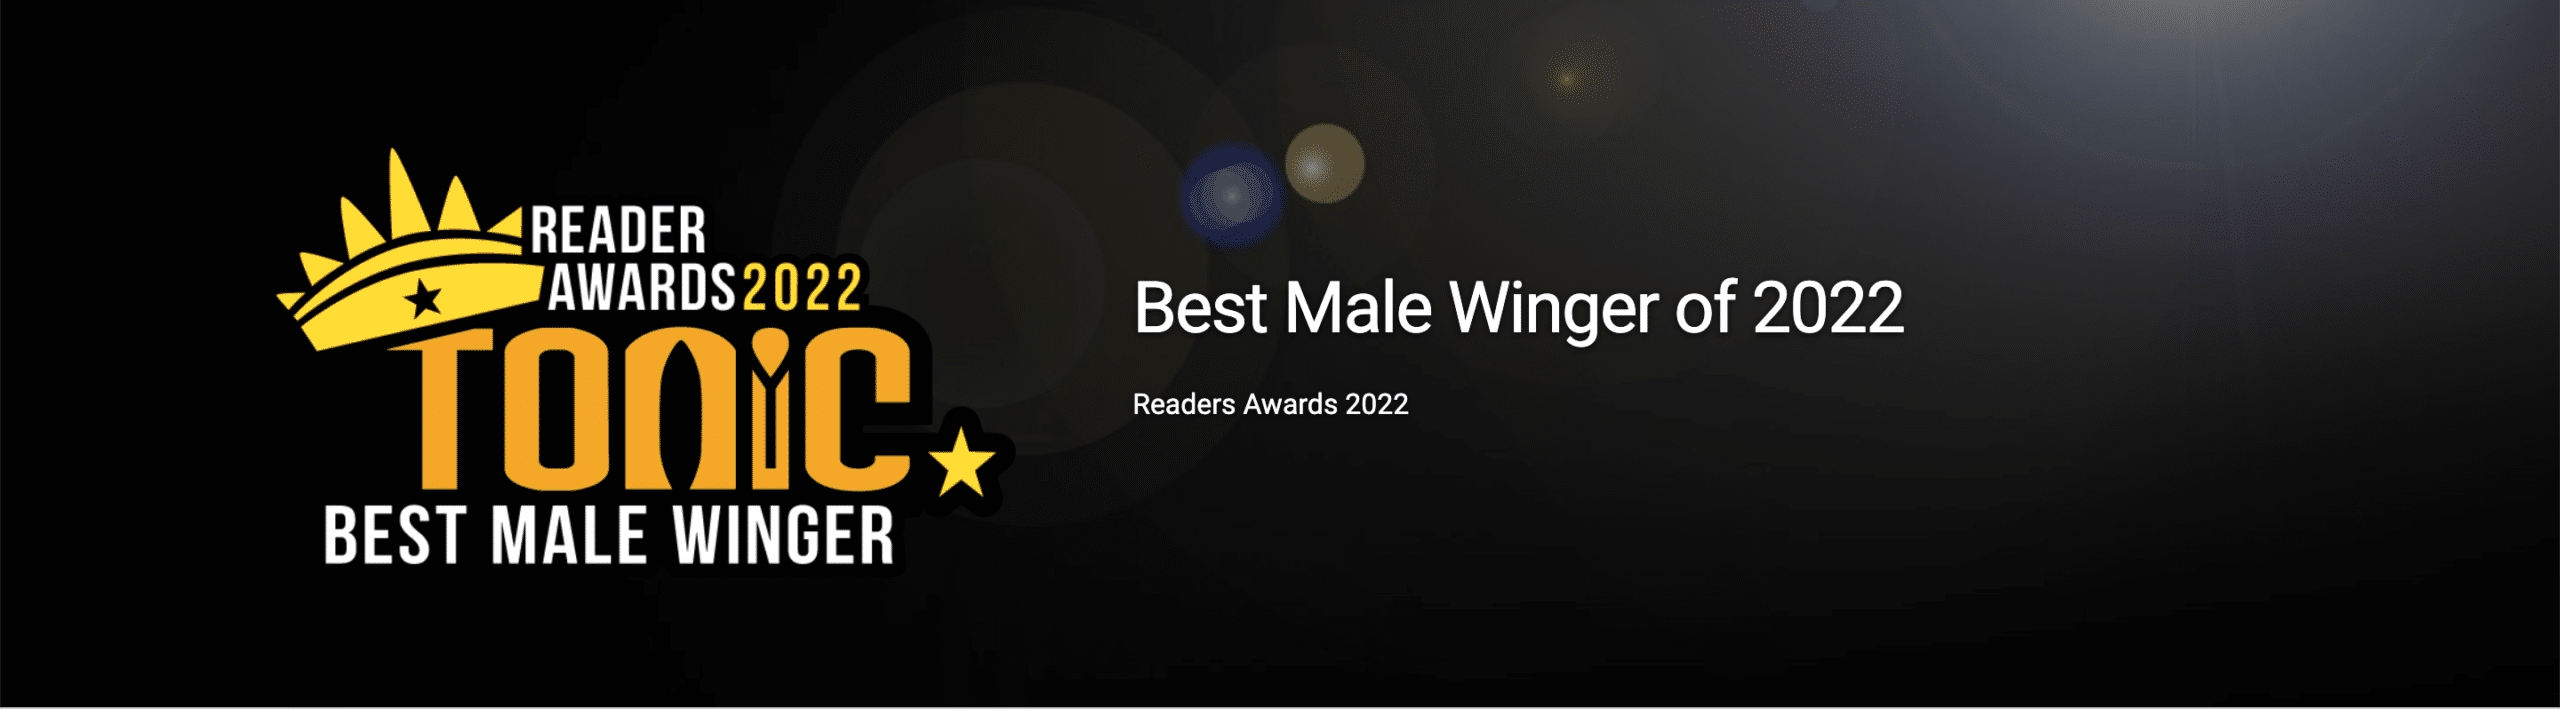 akdurablesupplyco-Tonic AK Best Male Winger of 2022 1IKSurf & Tonic Awards 2022News